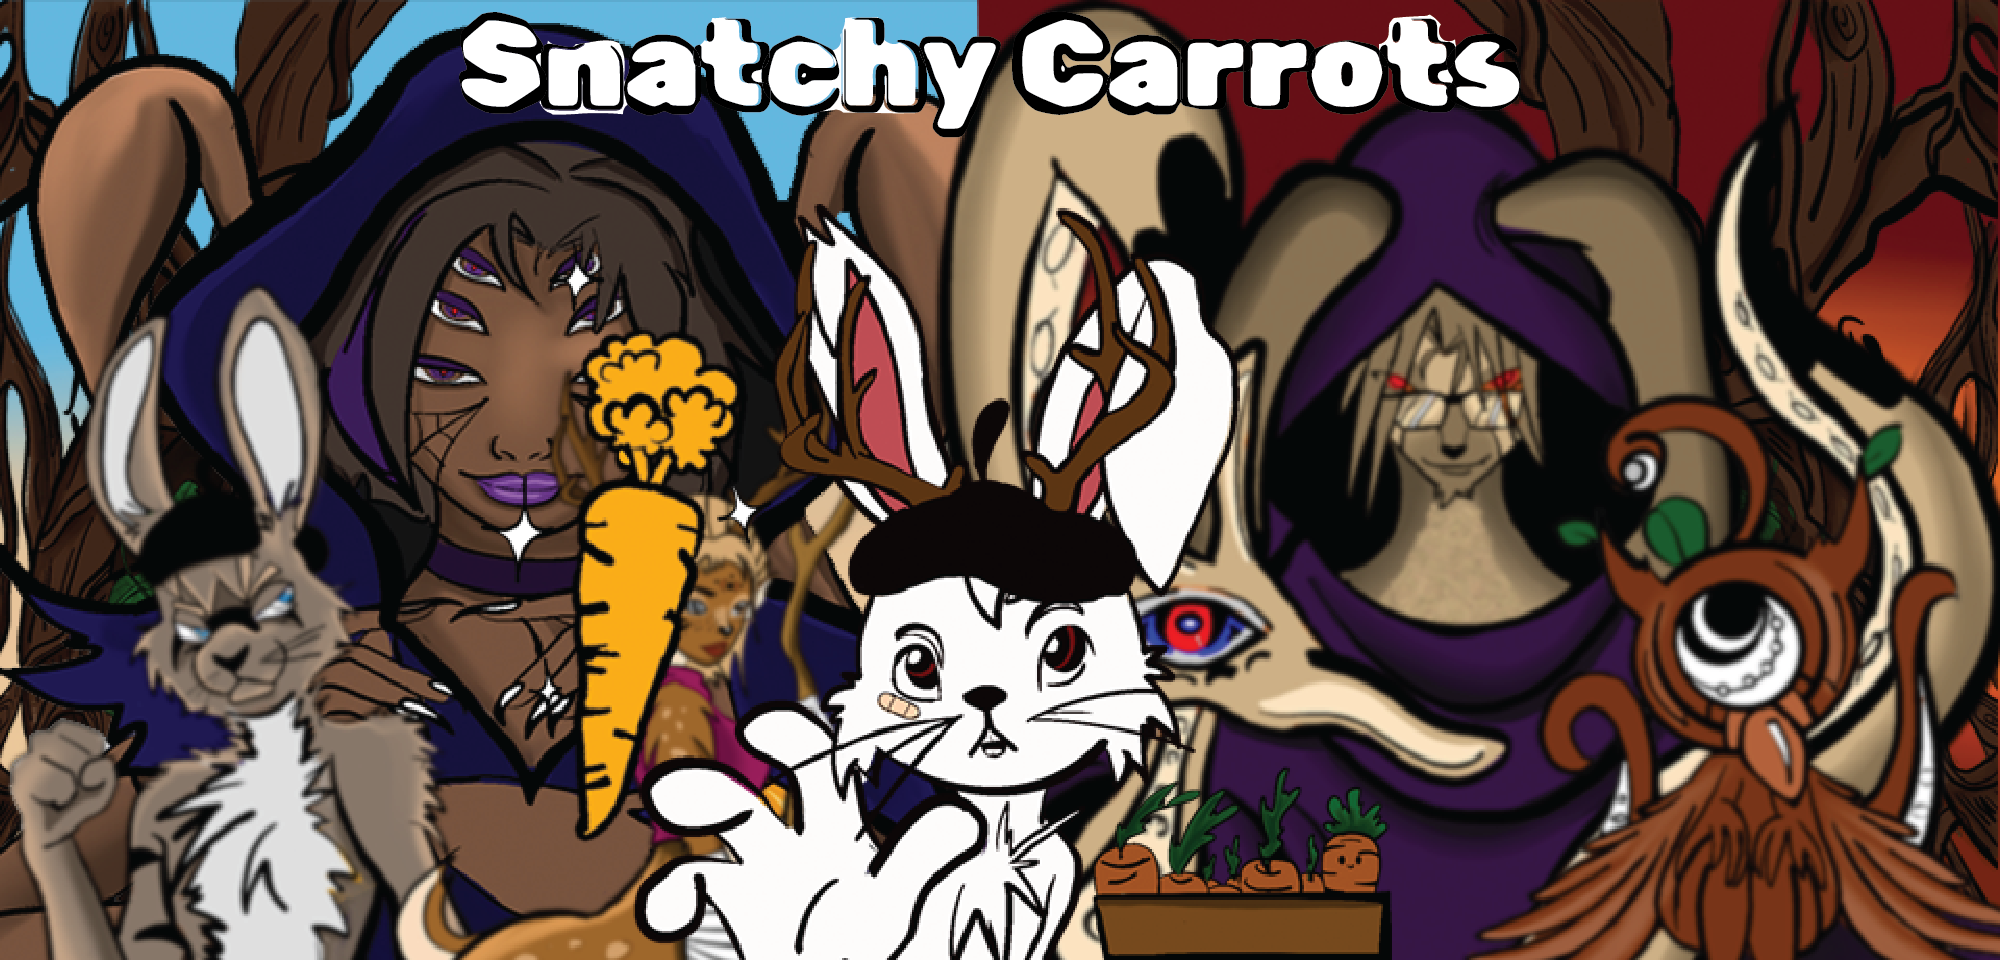 Snatchy Carrots